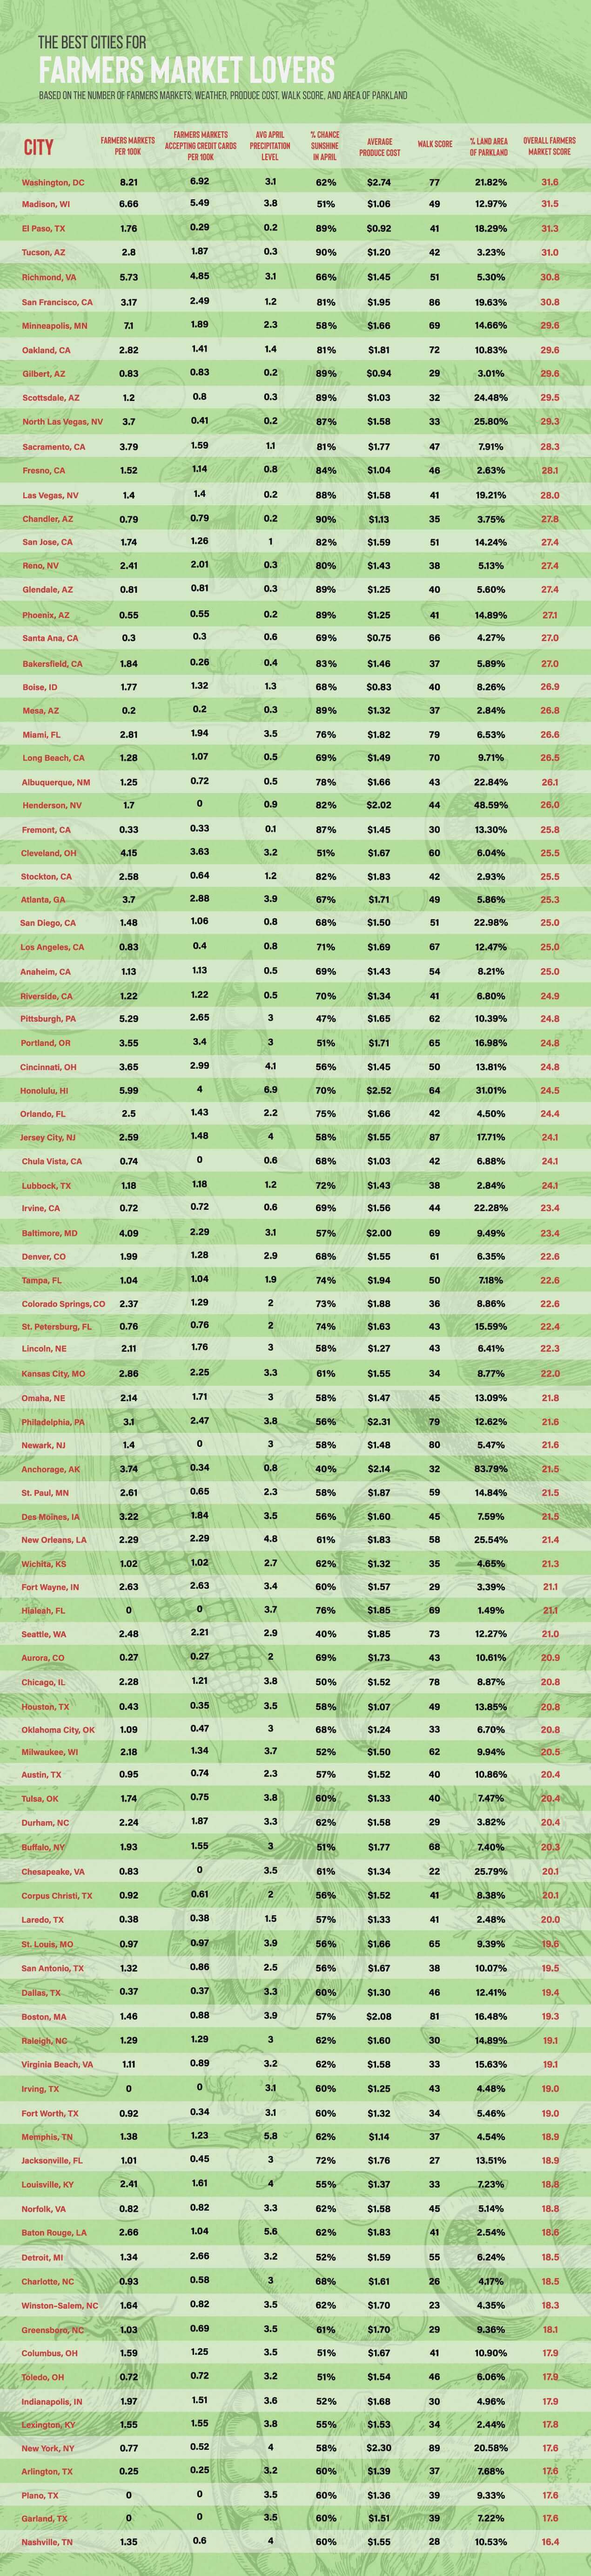 Chart showing farmers market ranking data